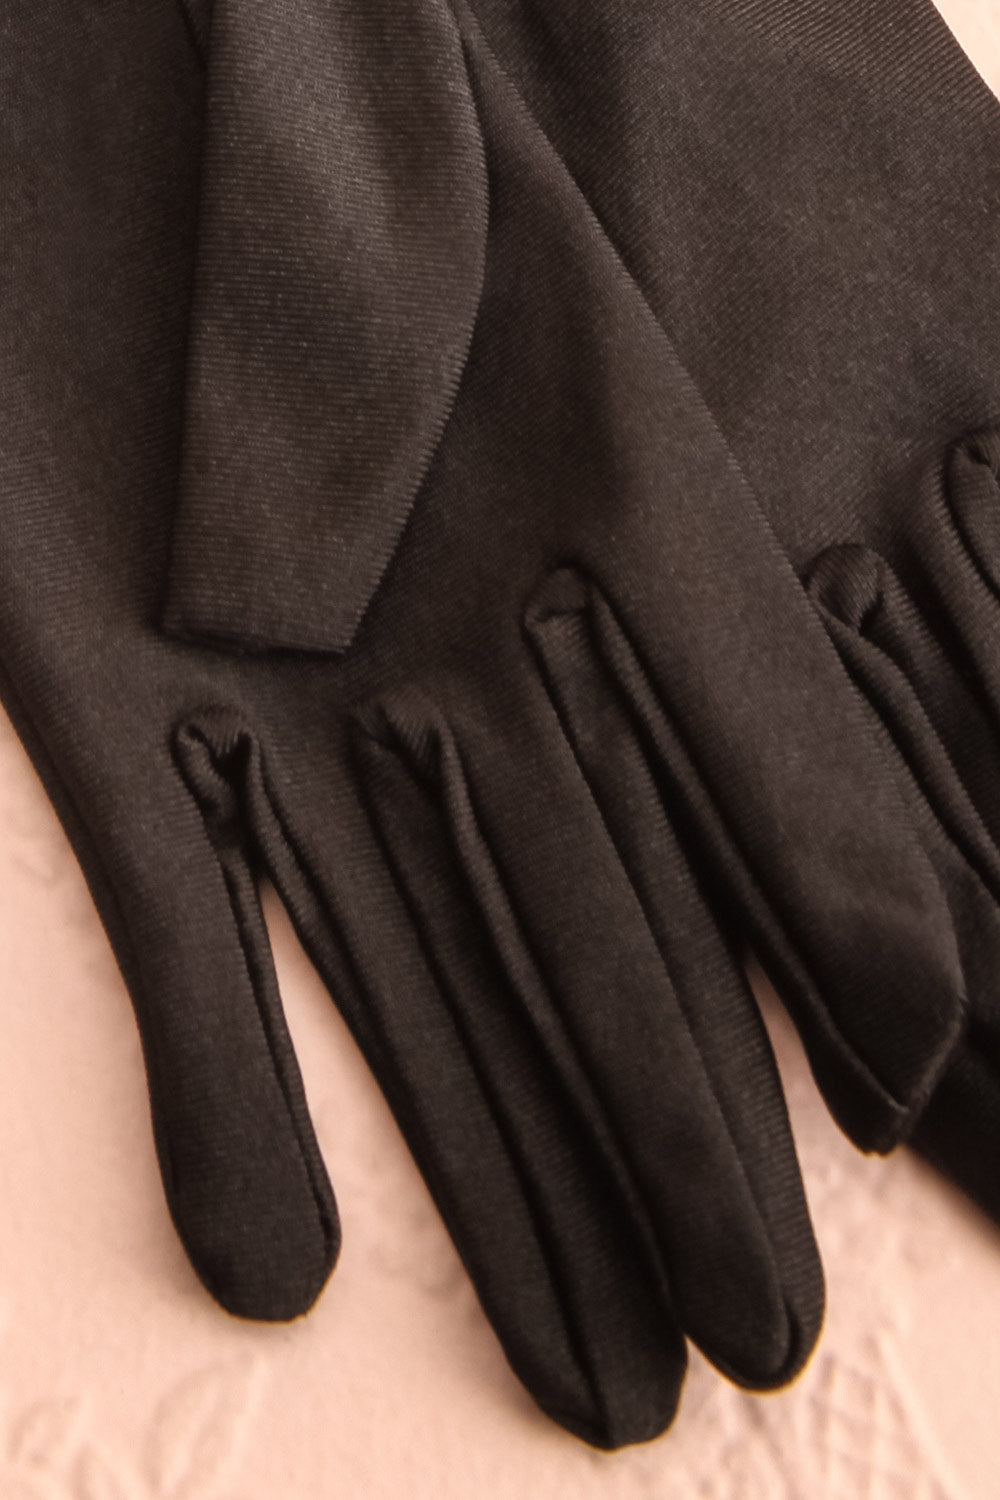 Zylla Black Evening Gloves | Boutique 1861 close-up